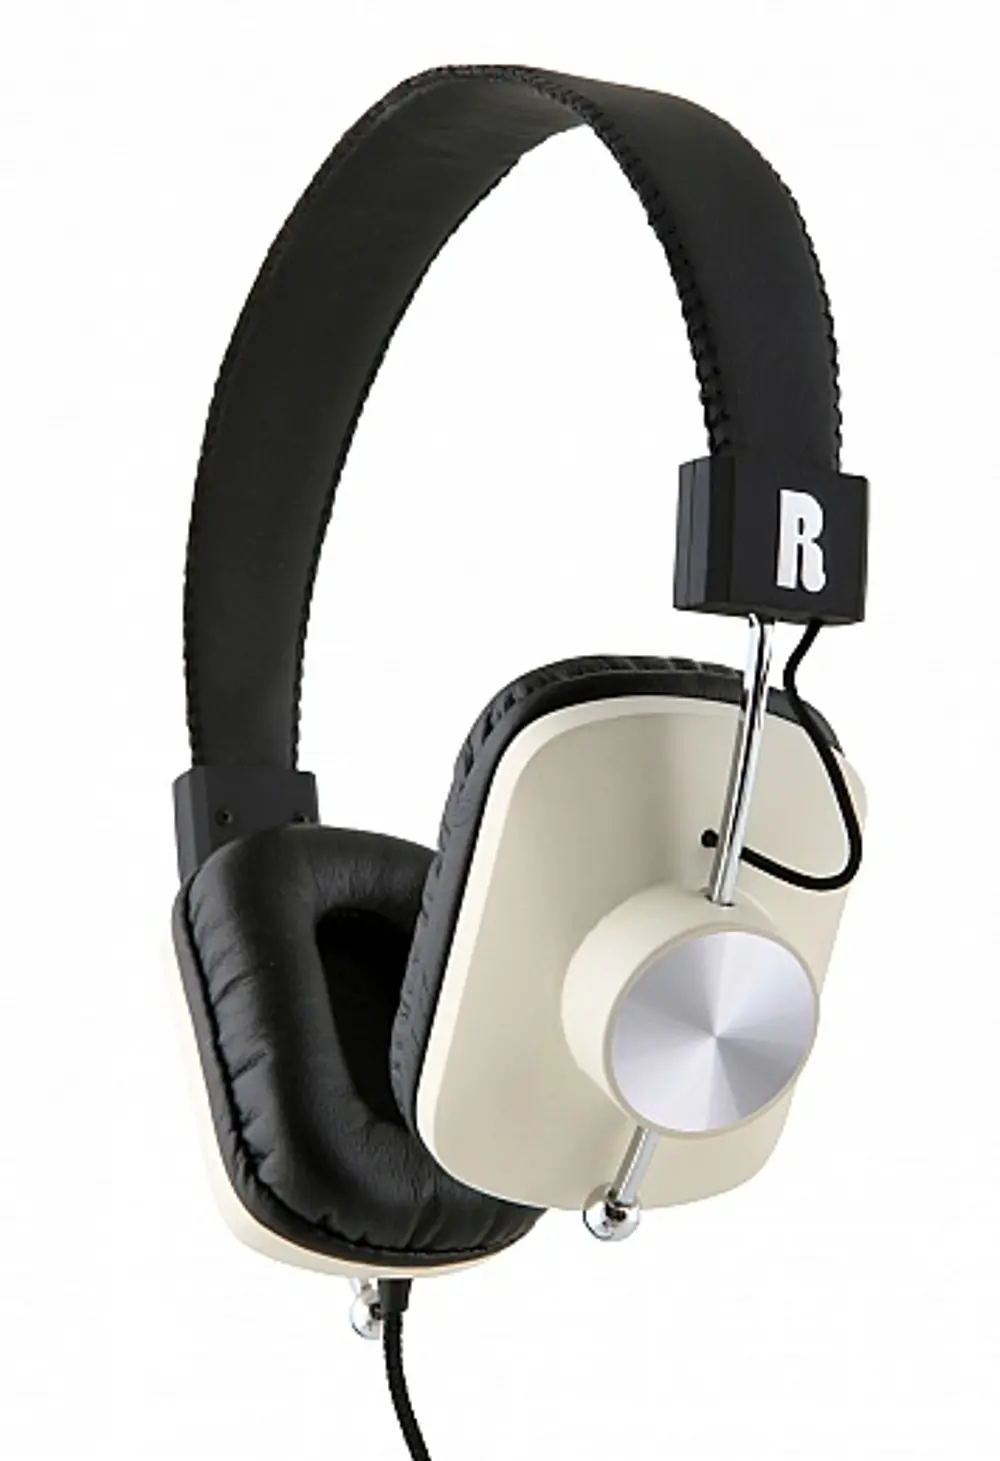 081511CNW,WHT,CONROL Eskuche Control White Headphone-1